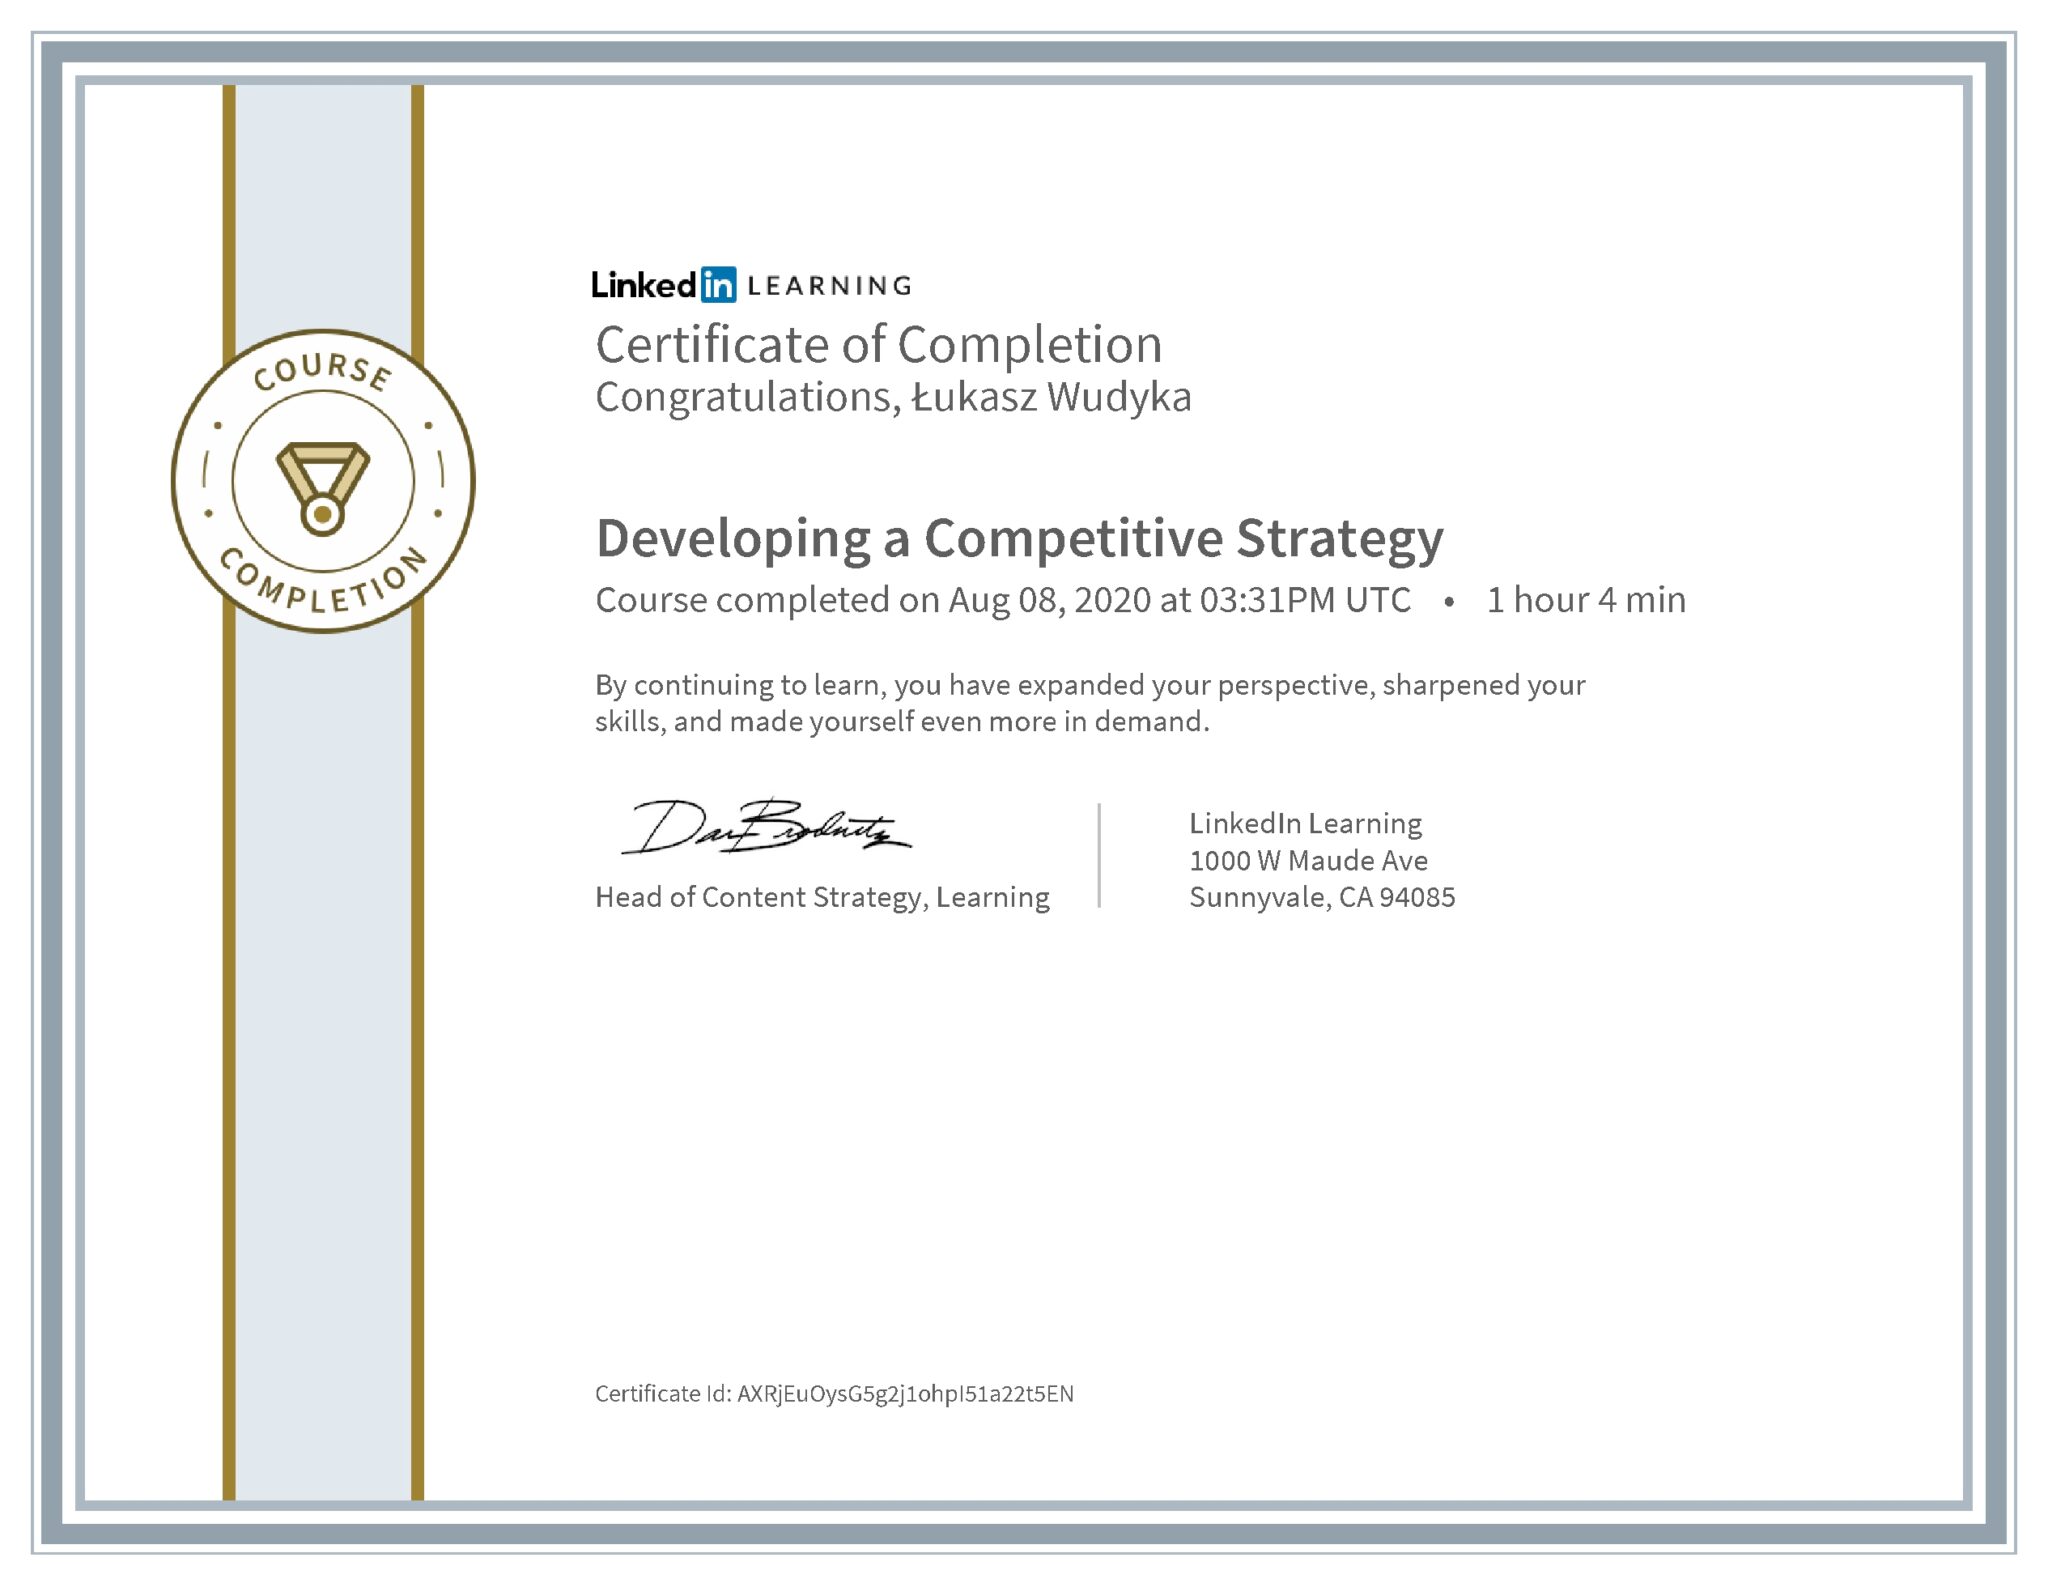 Łukasz Wudyka certyfikat LinkedIn Developing a Competitive Strategy